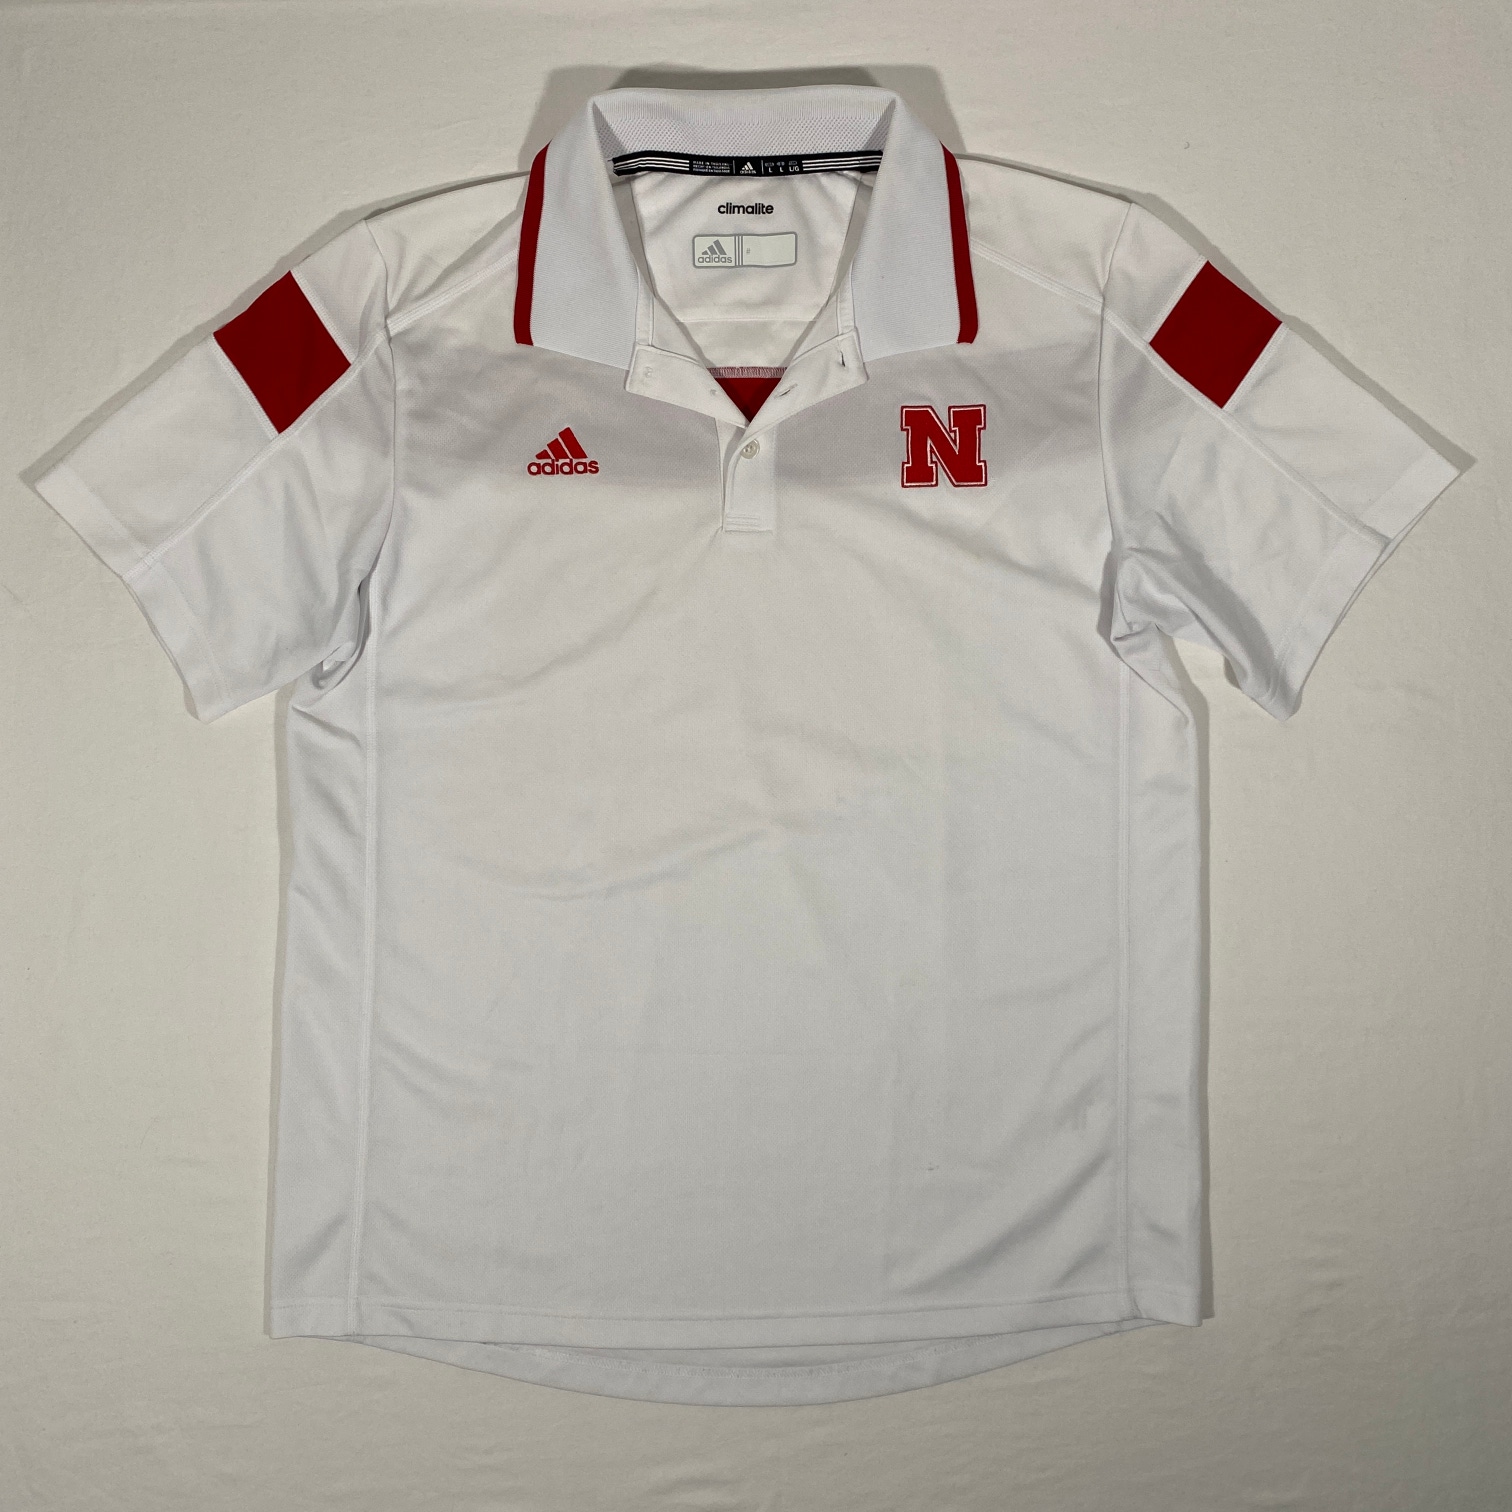 Adidas ClimaLite NCAA Nebraska Cornhuskers Men's Size L White Polo Golf Shirt